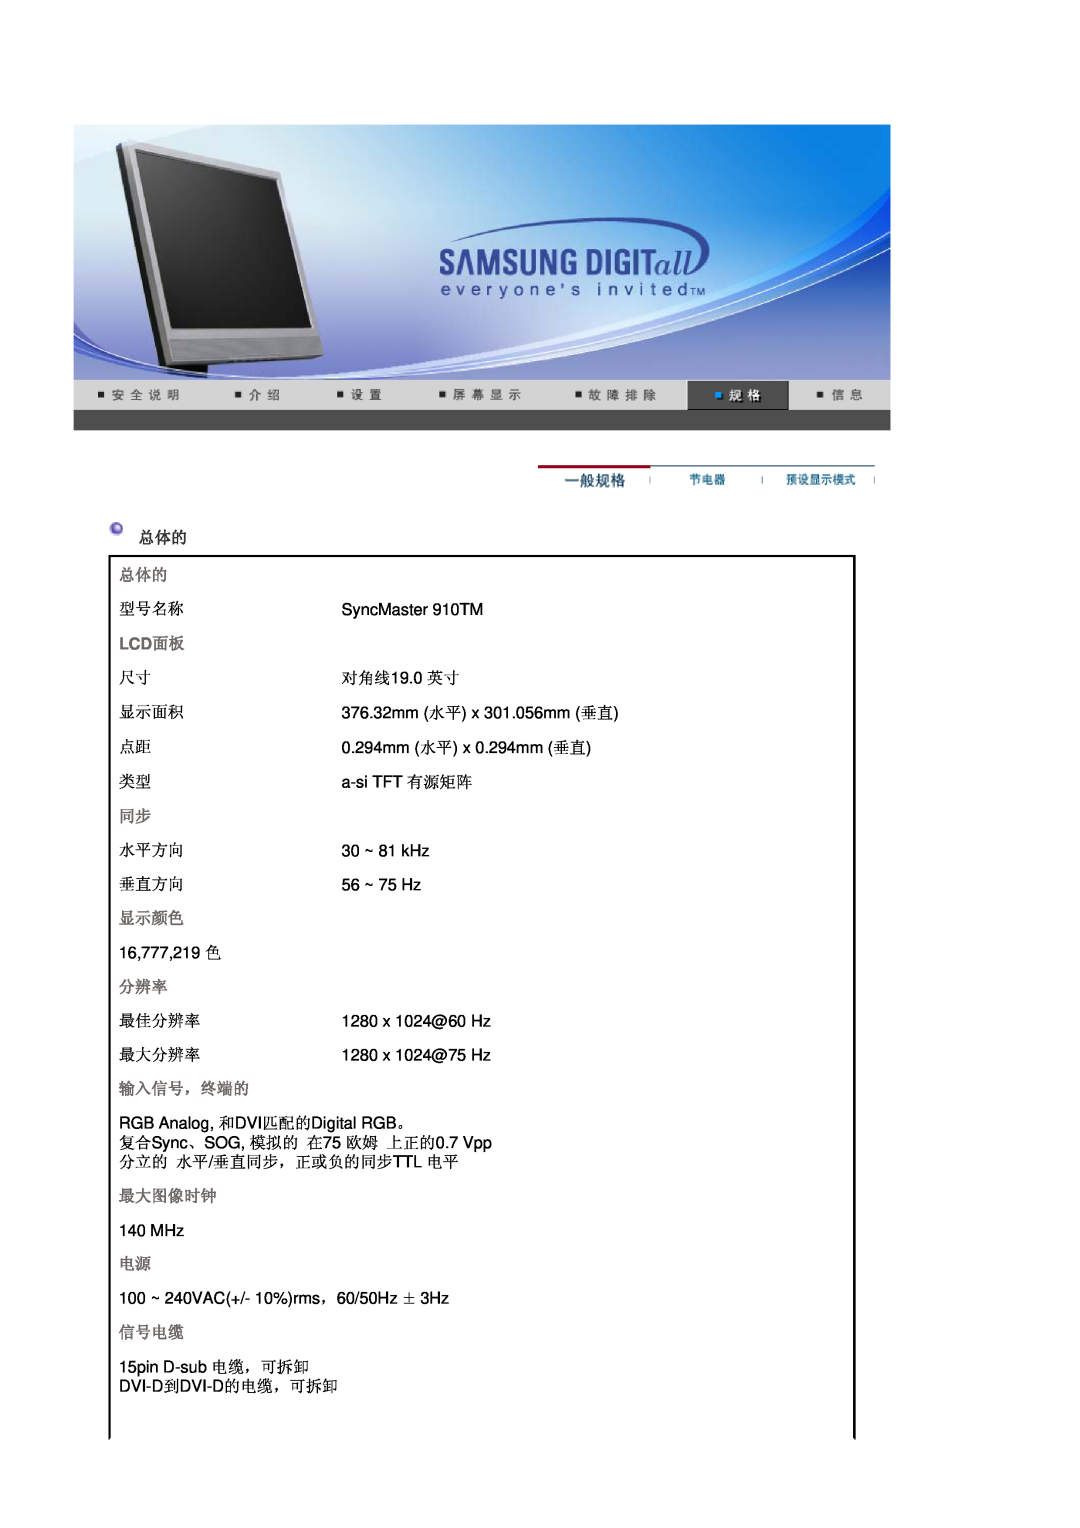 Samsung LS17MJSTSE/EDC, LS19MJSTS7/EDC, MJ19MSTSQ/EDC, MJ17MSTSQ/EDC, LS19MJSTSH/EDC Lcd 面板, 显示颜色, 输入信号，终端的, 最大图像时钟, 信号电缆 